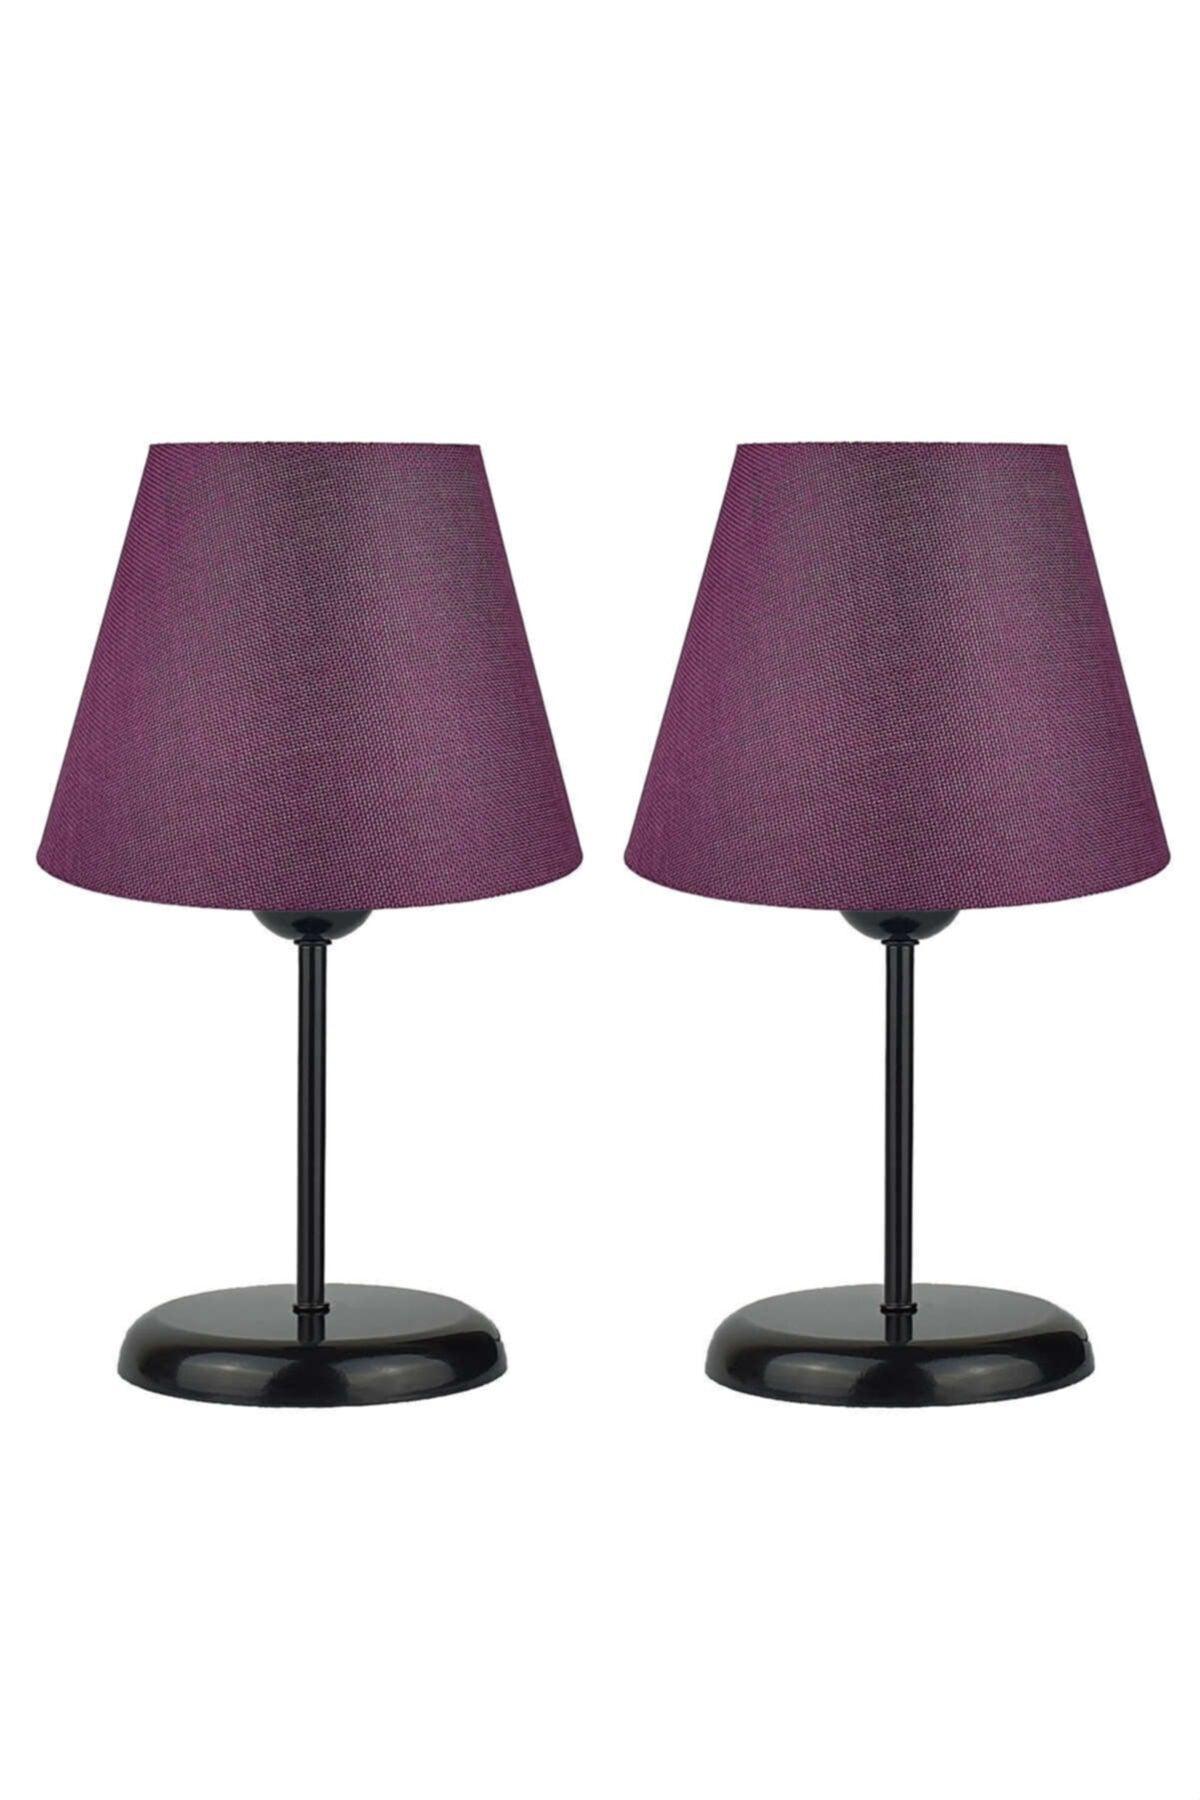 Fiesta Sun Double Metal Leg Lampshade Table Lamp - Black Leg (purple) - Swordslife